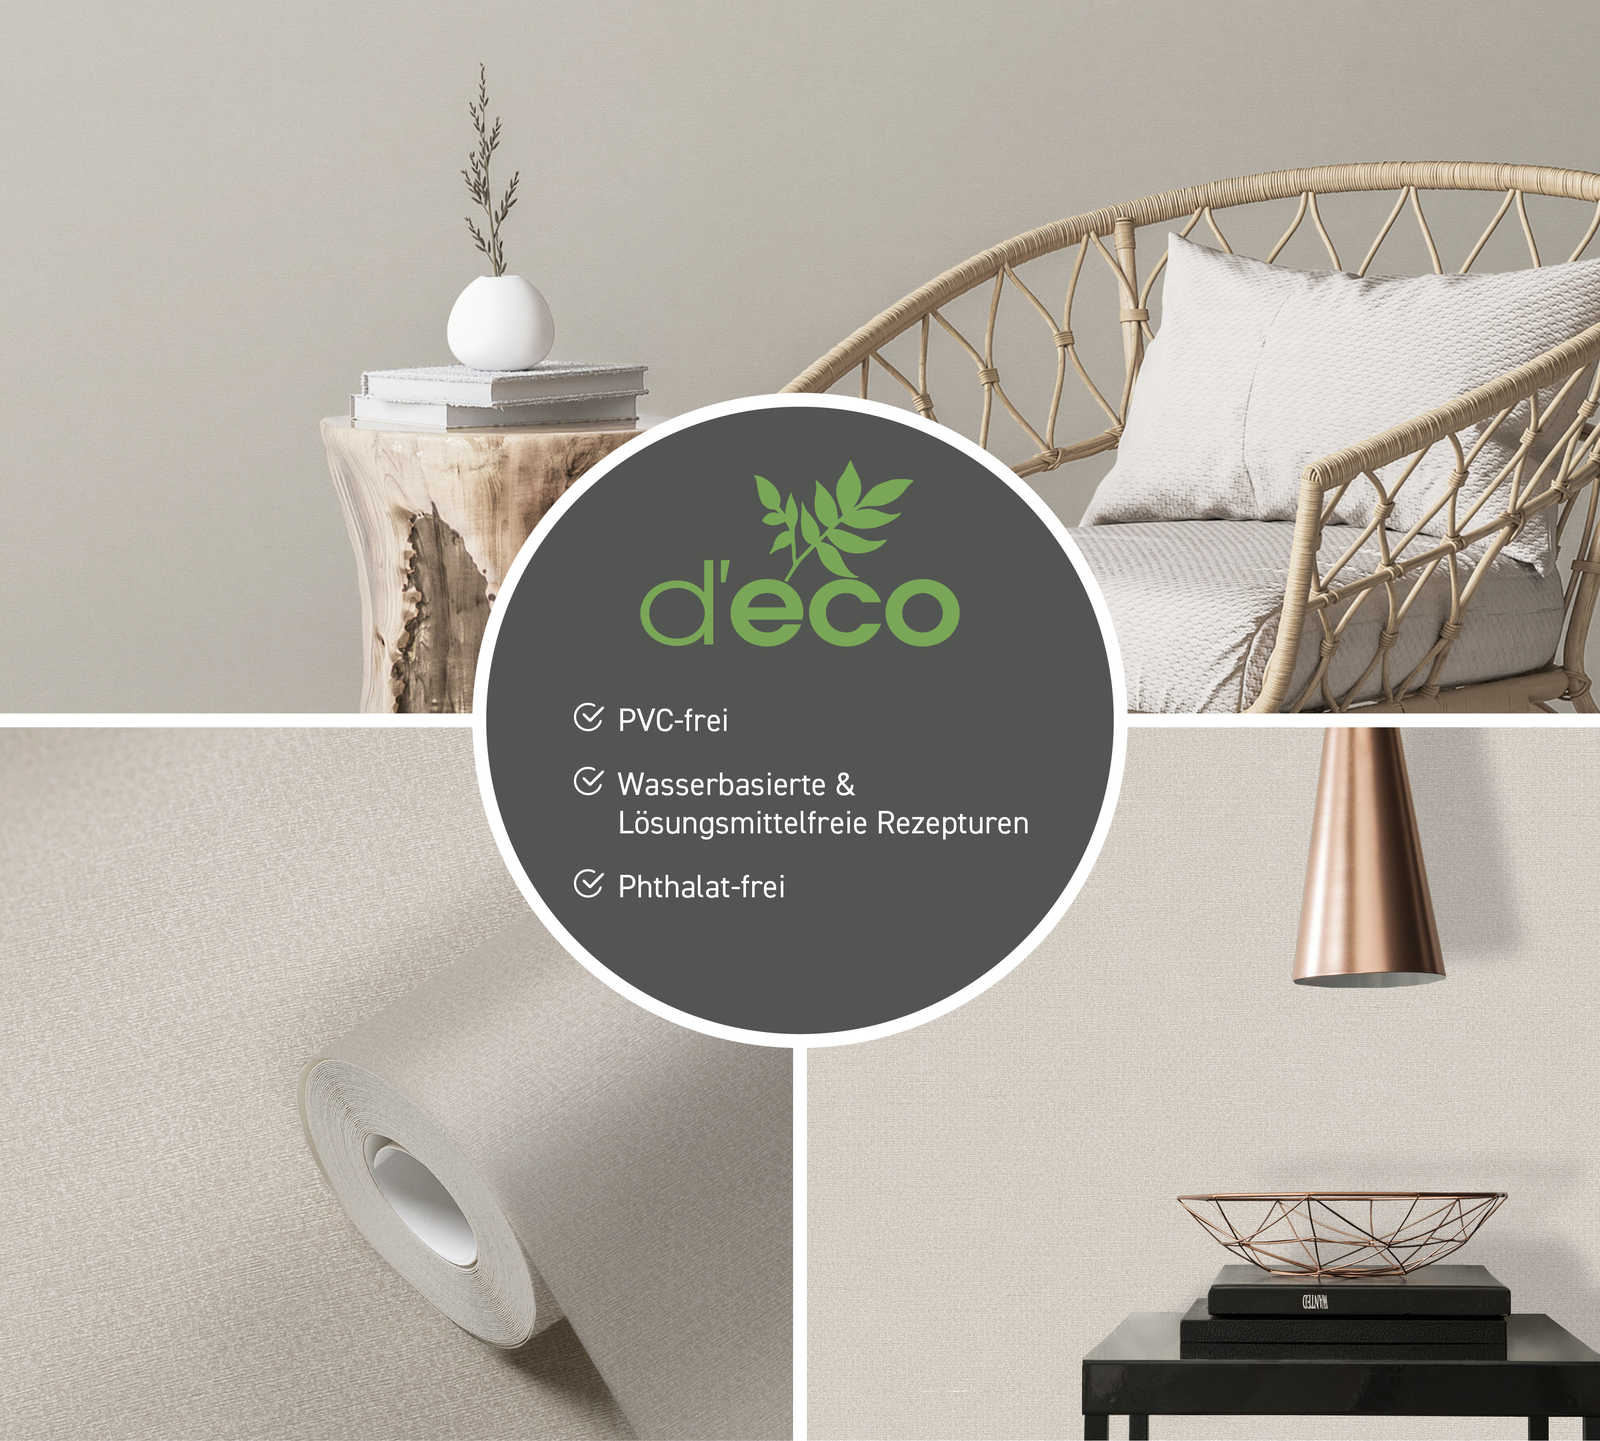             Non-woven wallpaper with polka dot pattern & gloss effect PVC-free - Beige, Grey
        